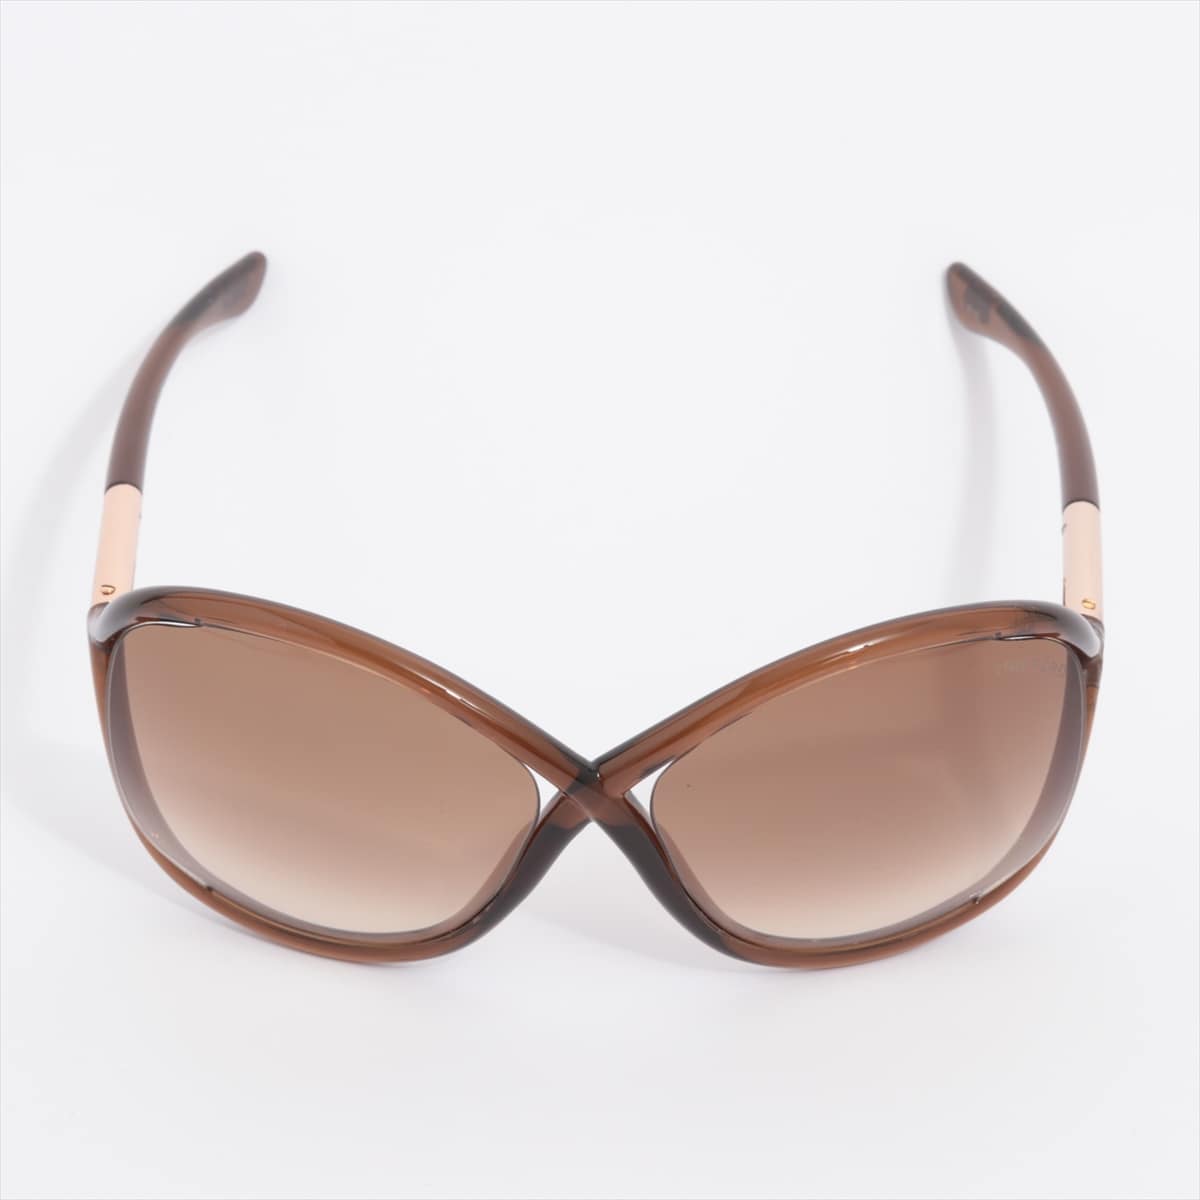 Tom Ford TF9 Sunglasses Plastic Brown